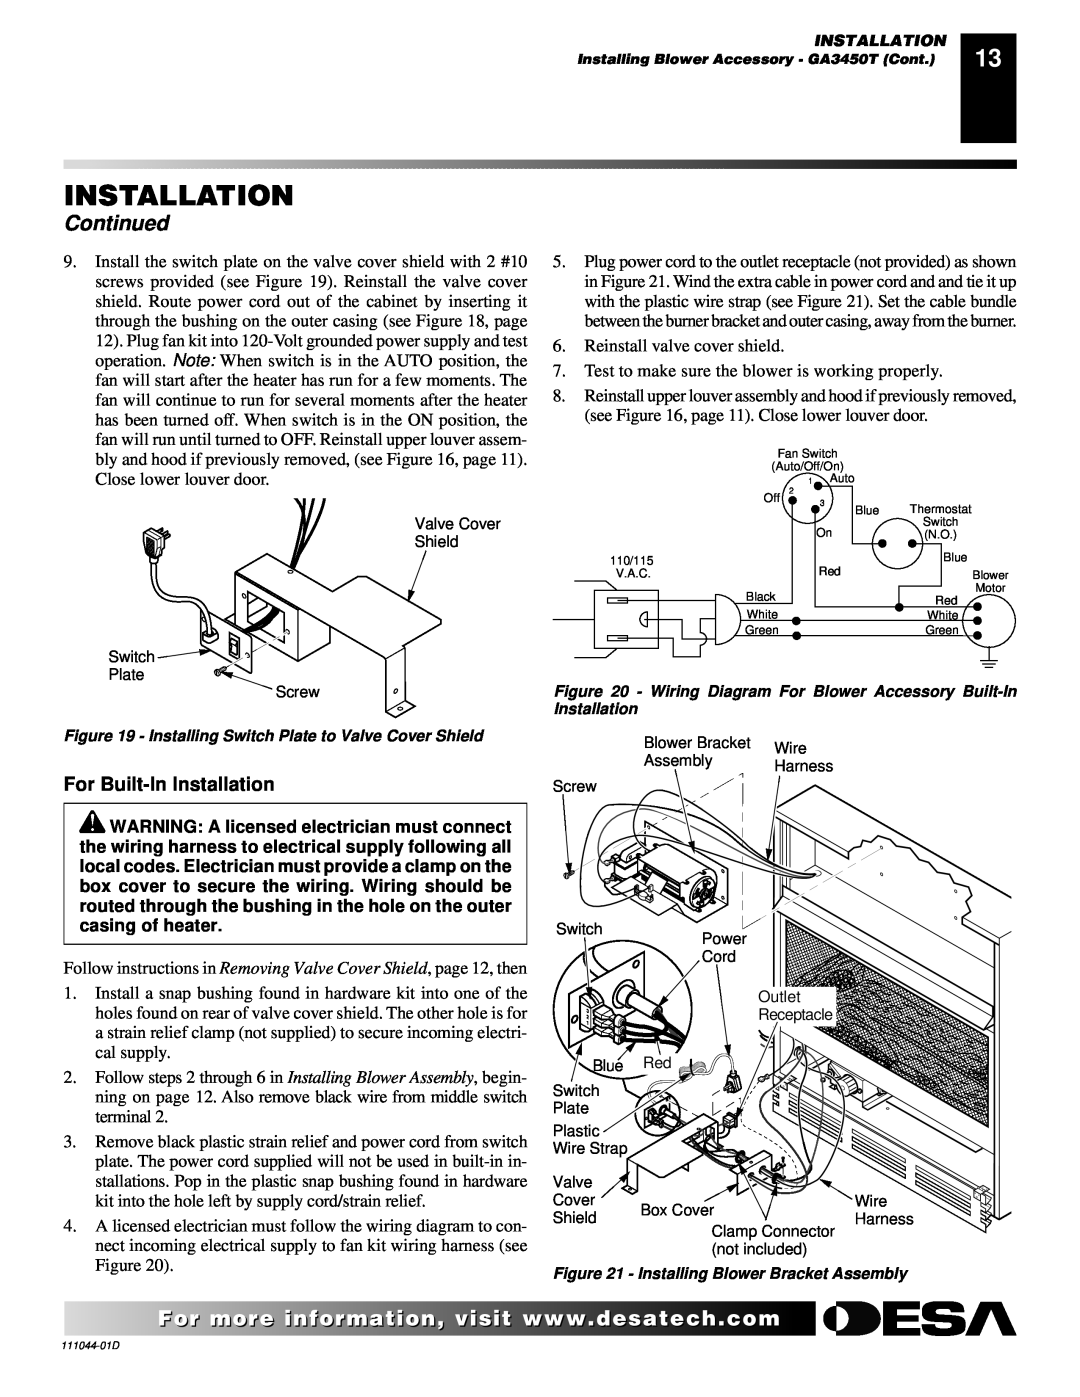 Desa Tech CGCFTN, CGCFTP installation manual For Built-InInstallation, Continued 